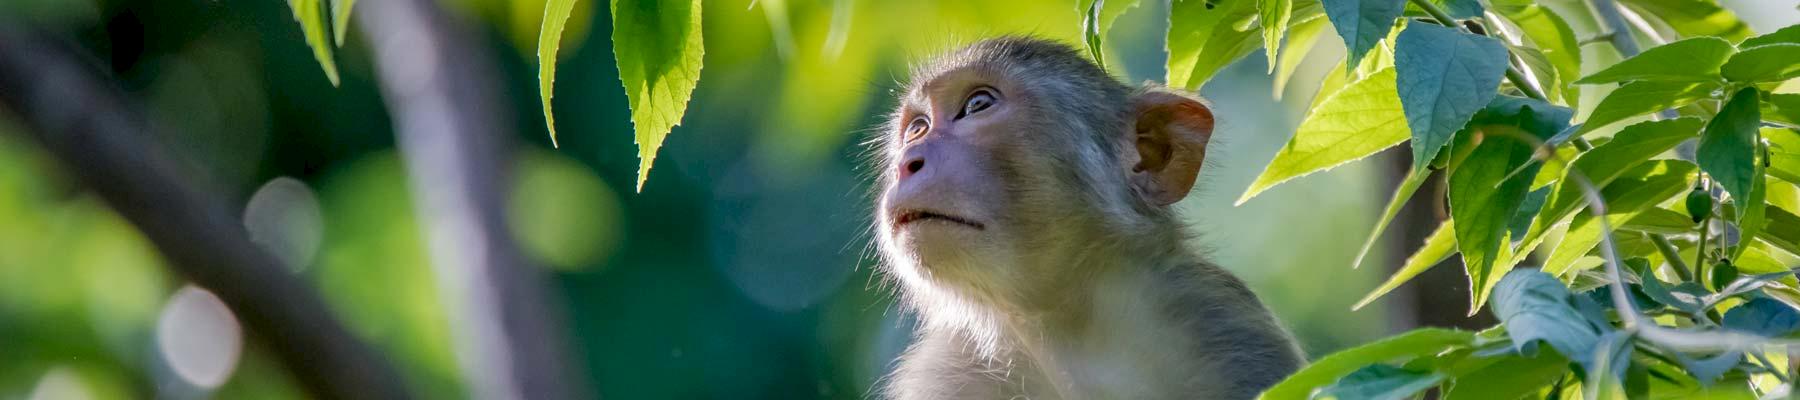 Indochinese Rhesus Macaque © Nguyen Manh Phuc 